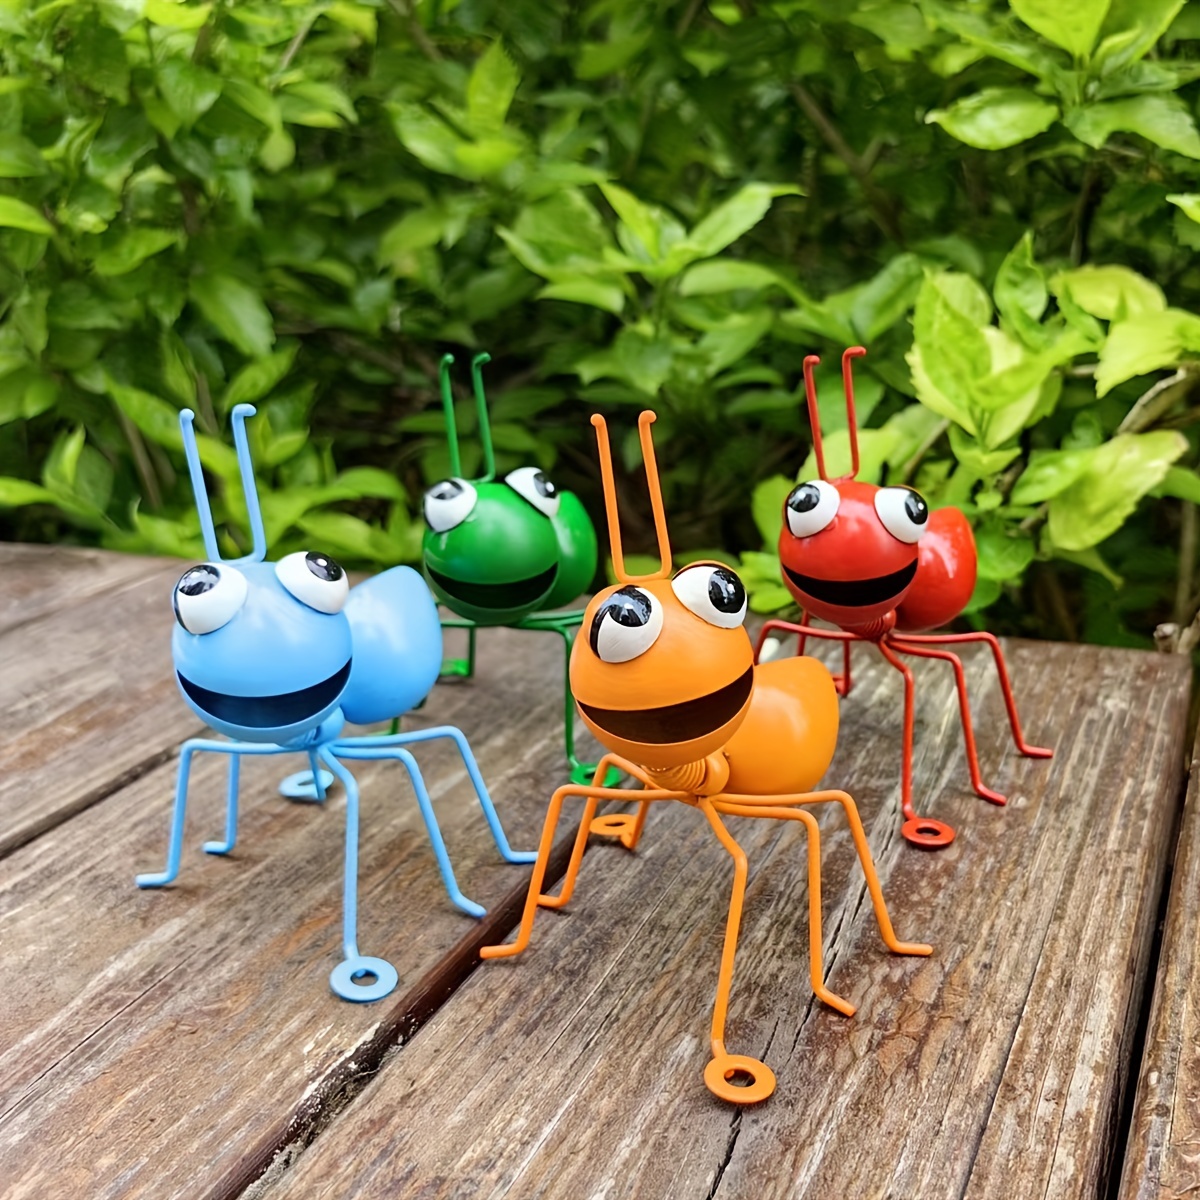 Hormigas, Juguetes De Jardín. Grandes Insectos De Juguete De Metal